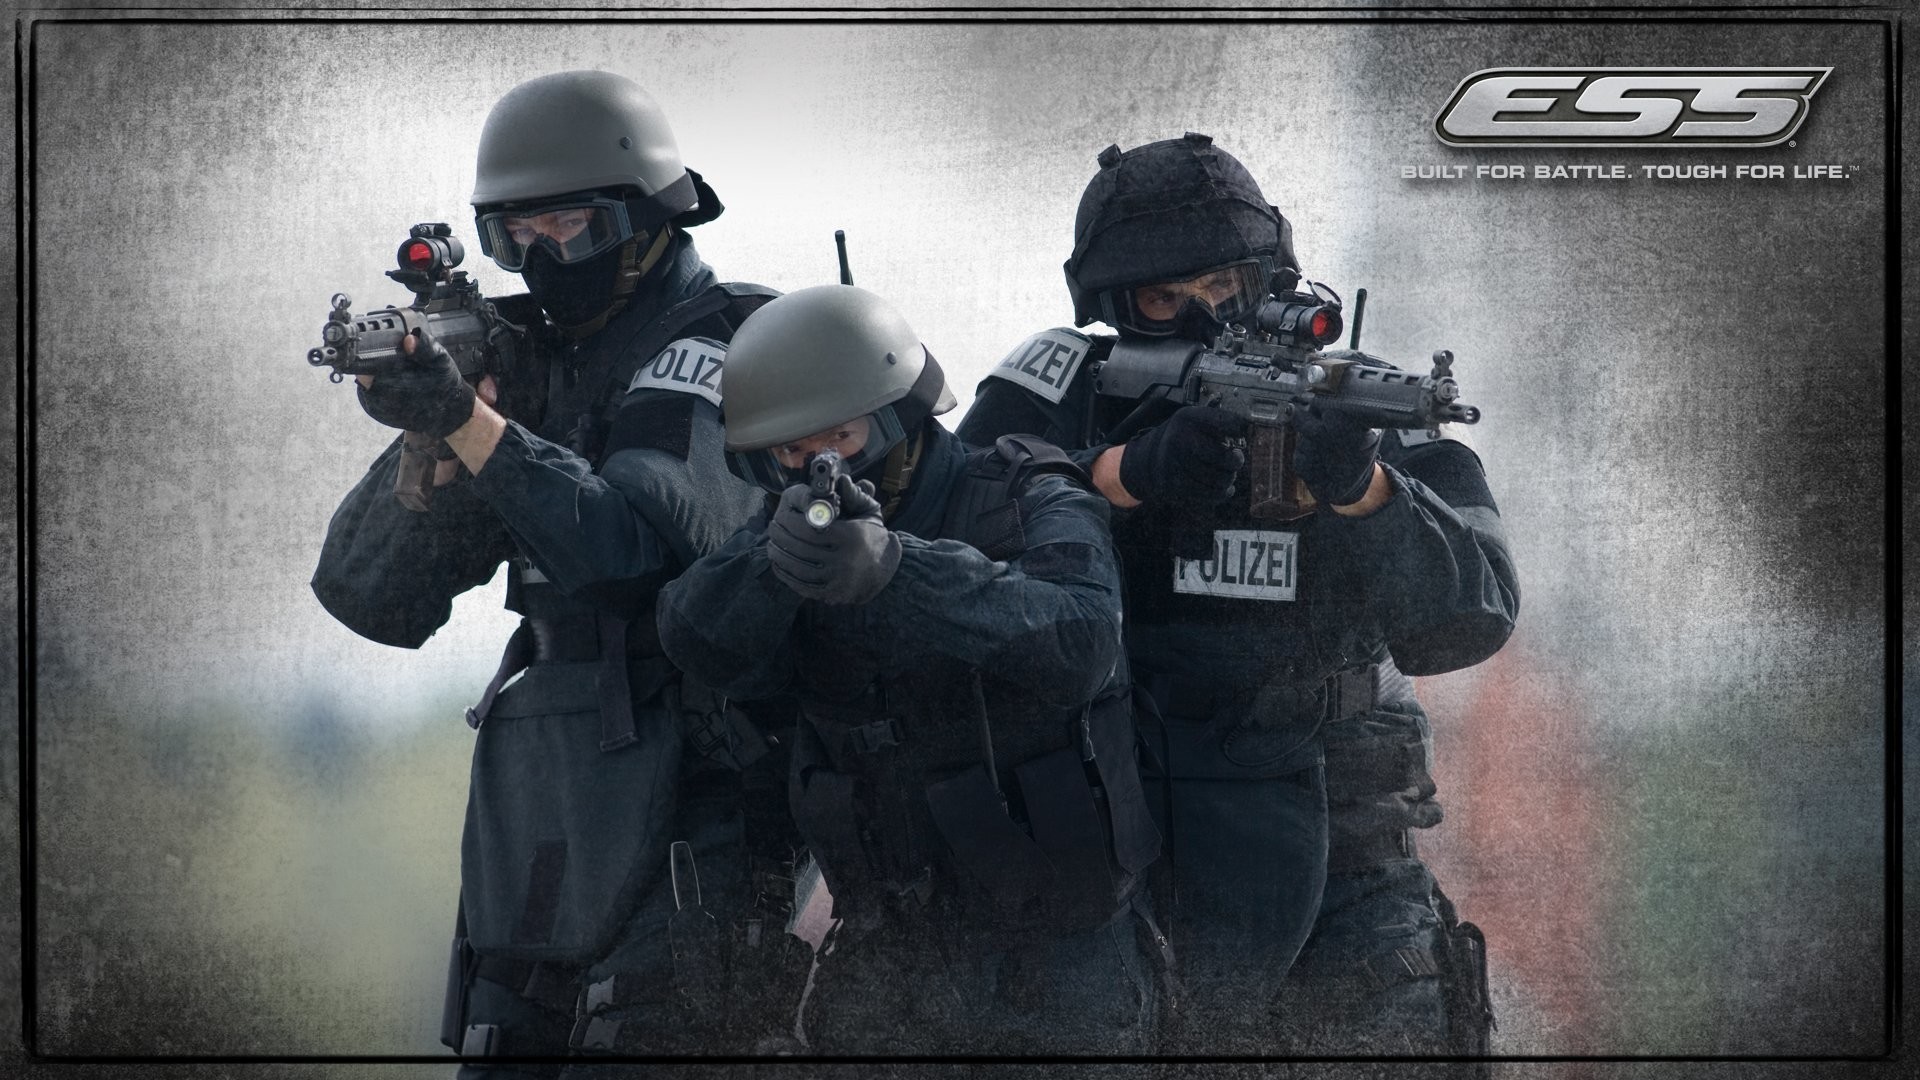 Wallpaper Tom Clancys Rainbow Six, Soldier, Standing, Headgear, Swat,  Background - Download Free Image